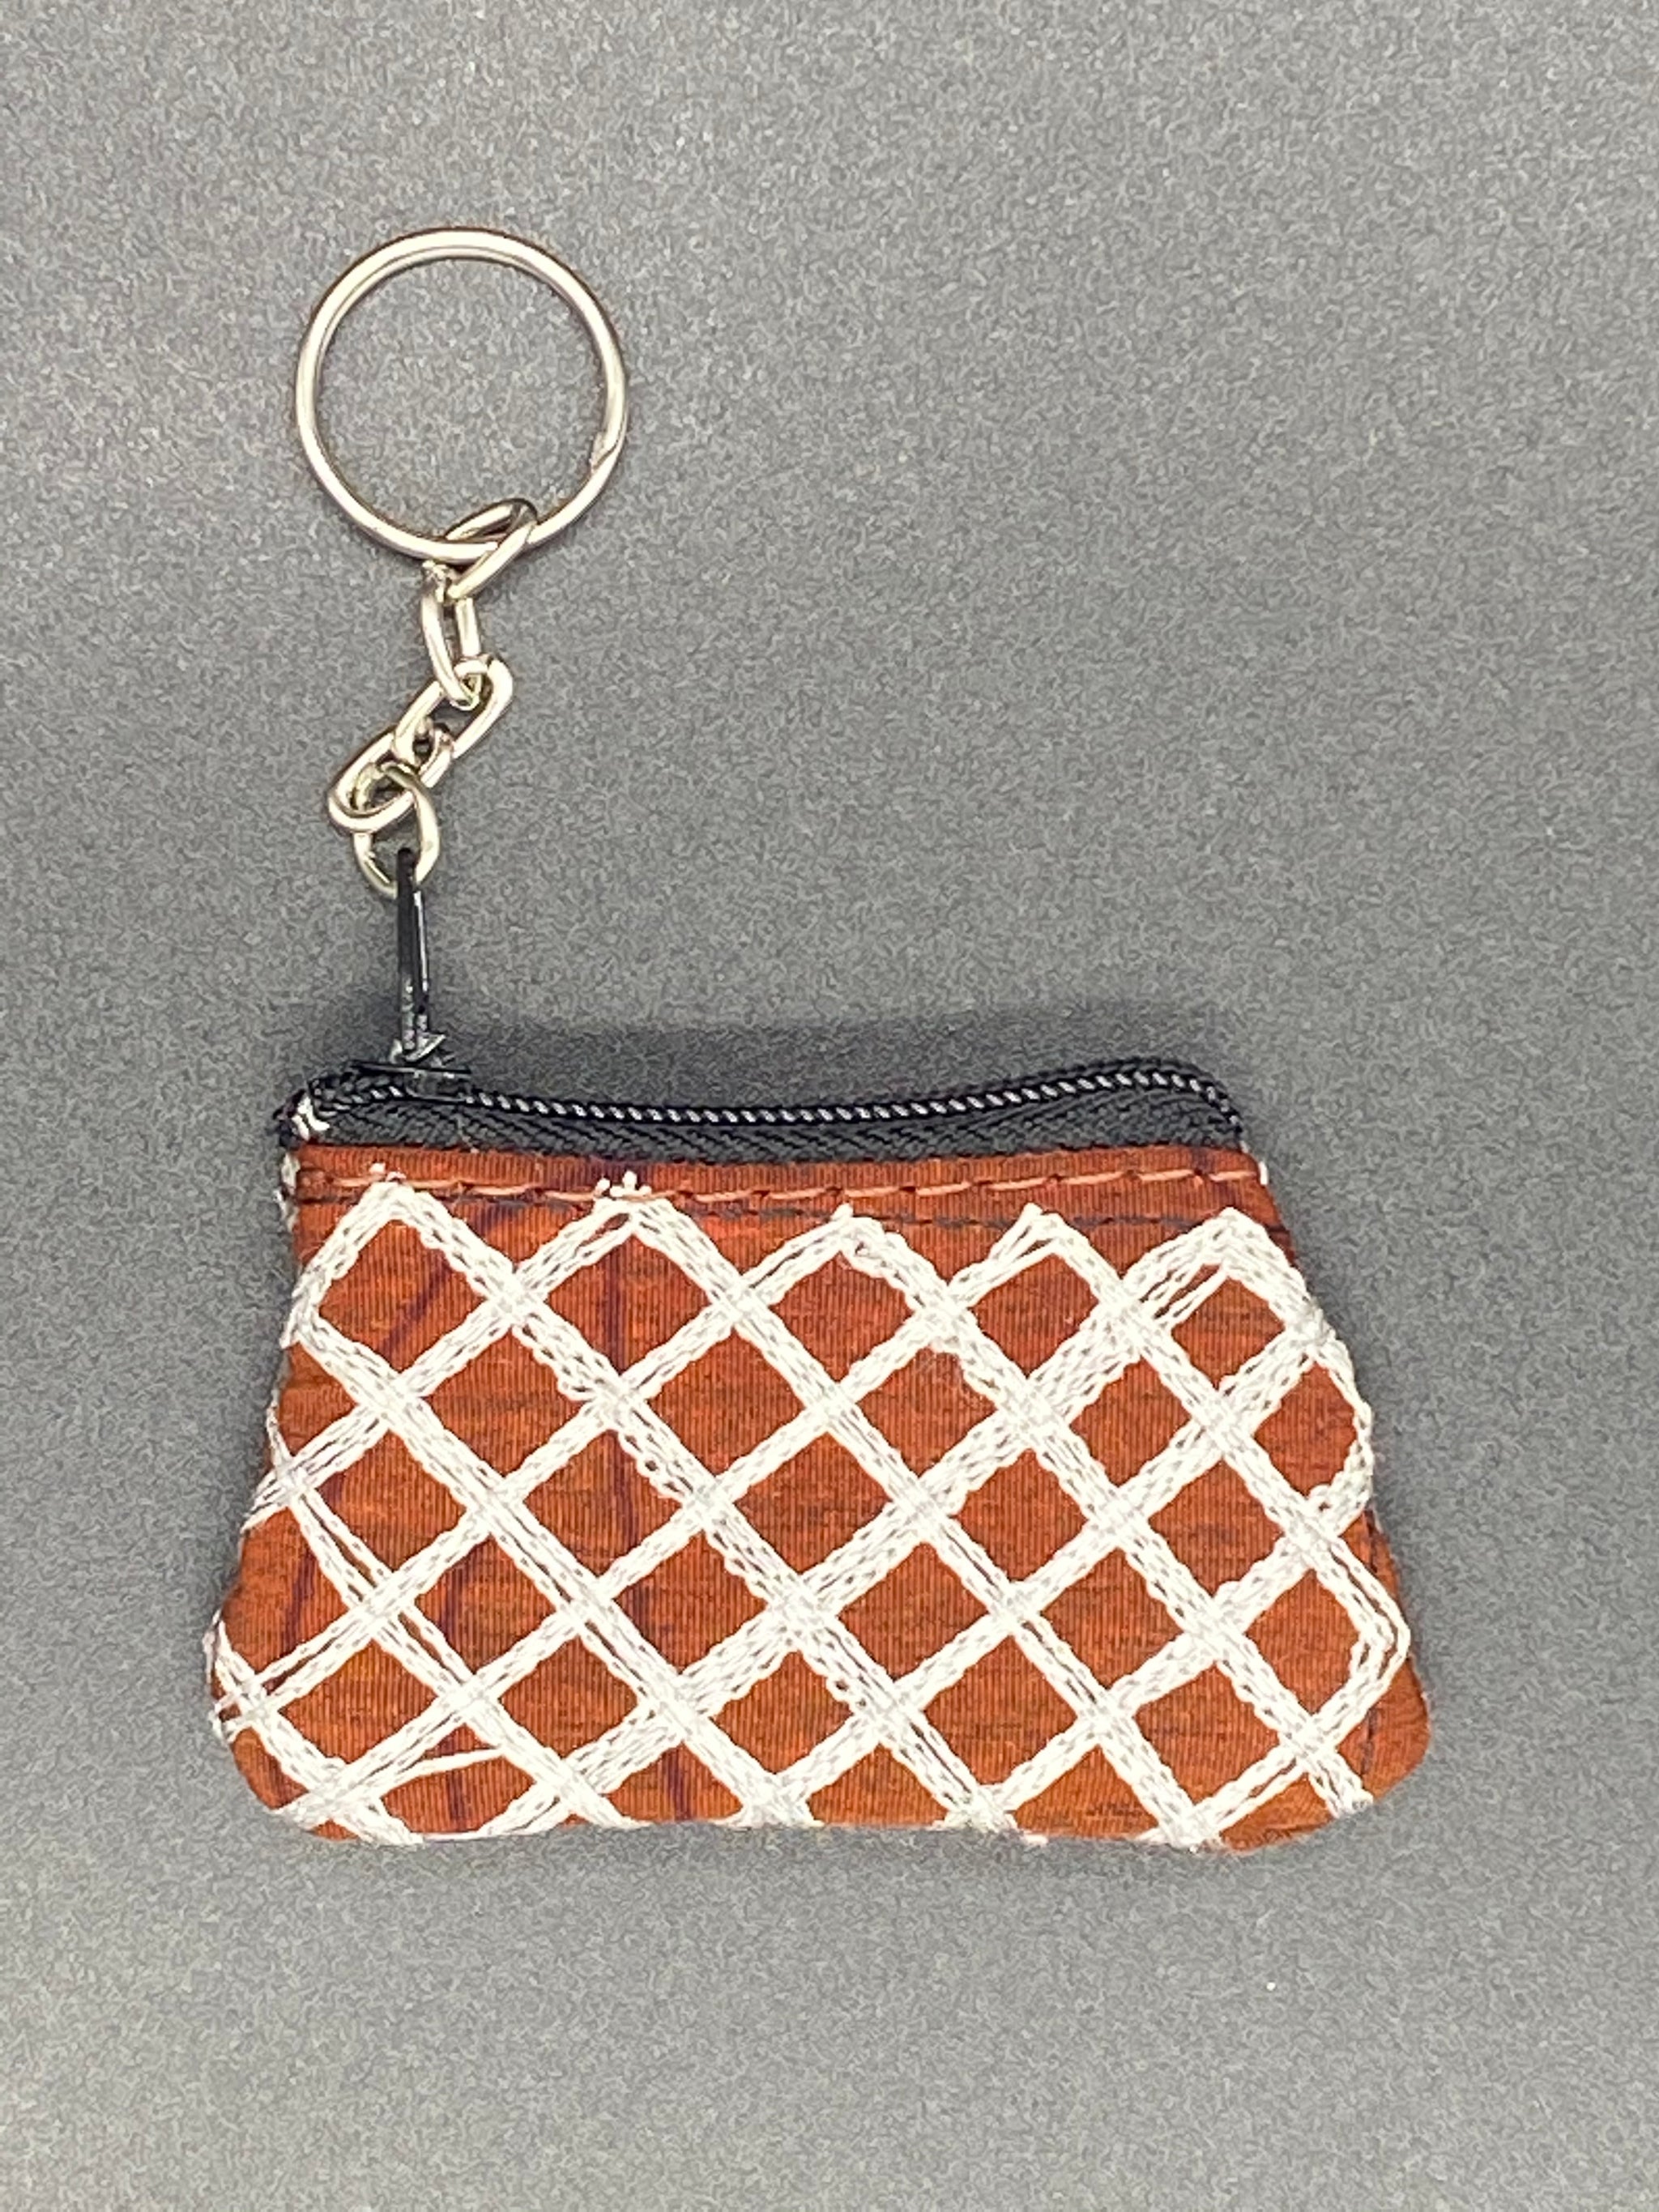 Mini Purse Hand Sewed Keychain - Corazón Clothing